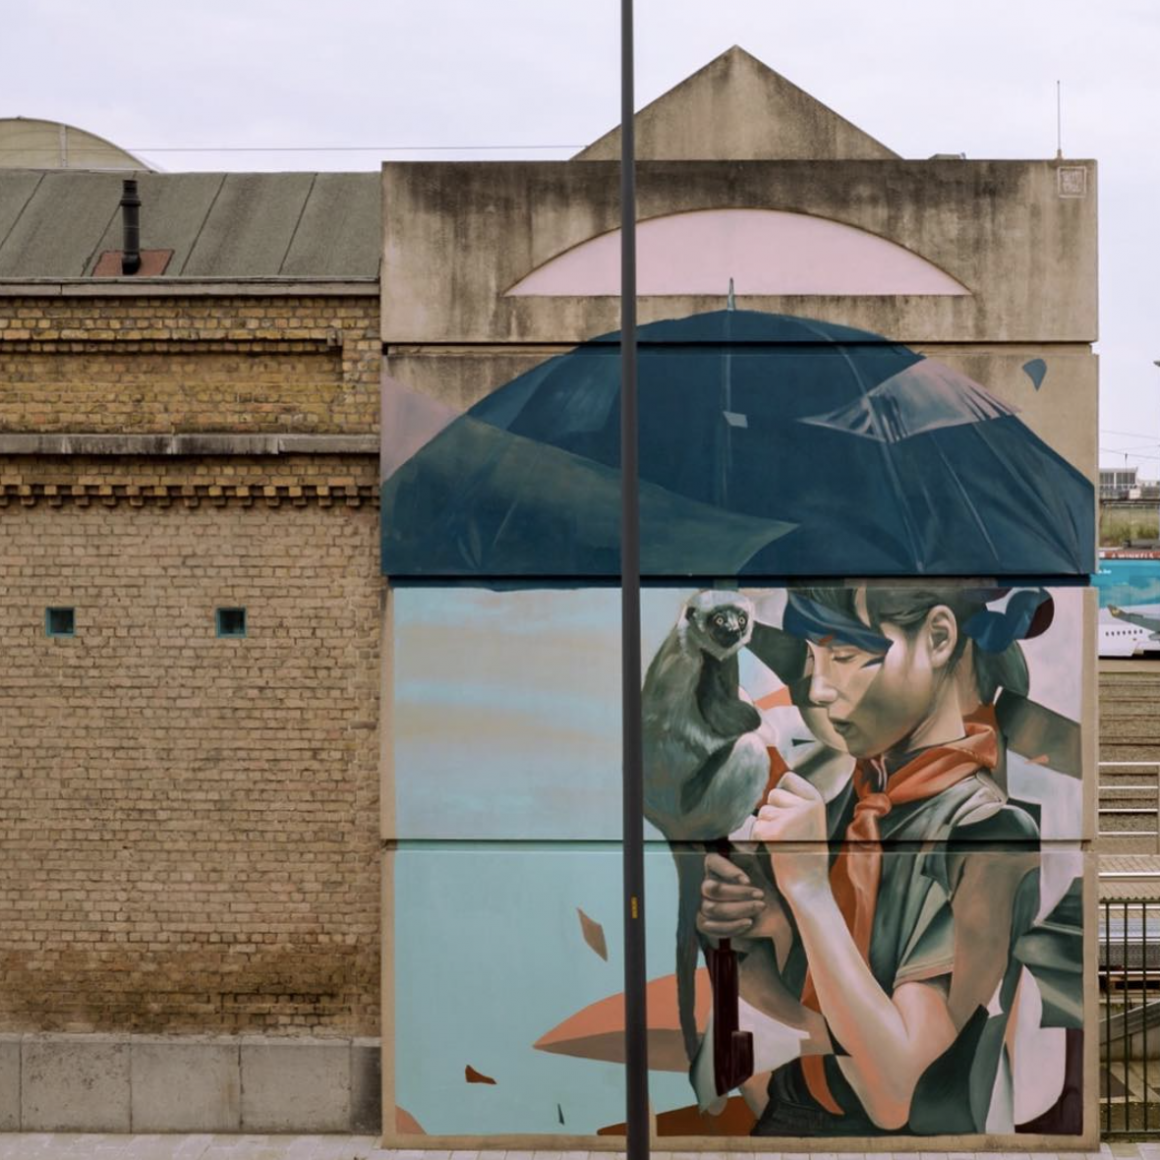 Peinture murale de du duo de street artistes Telmo Miel